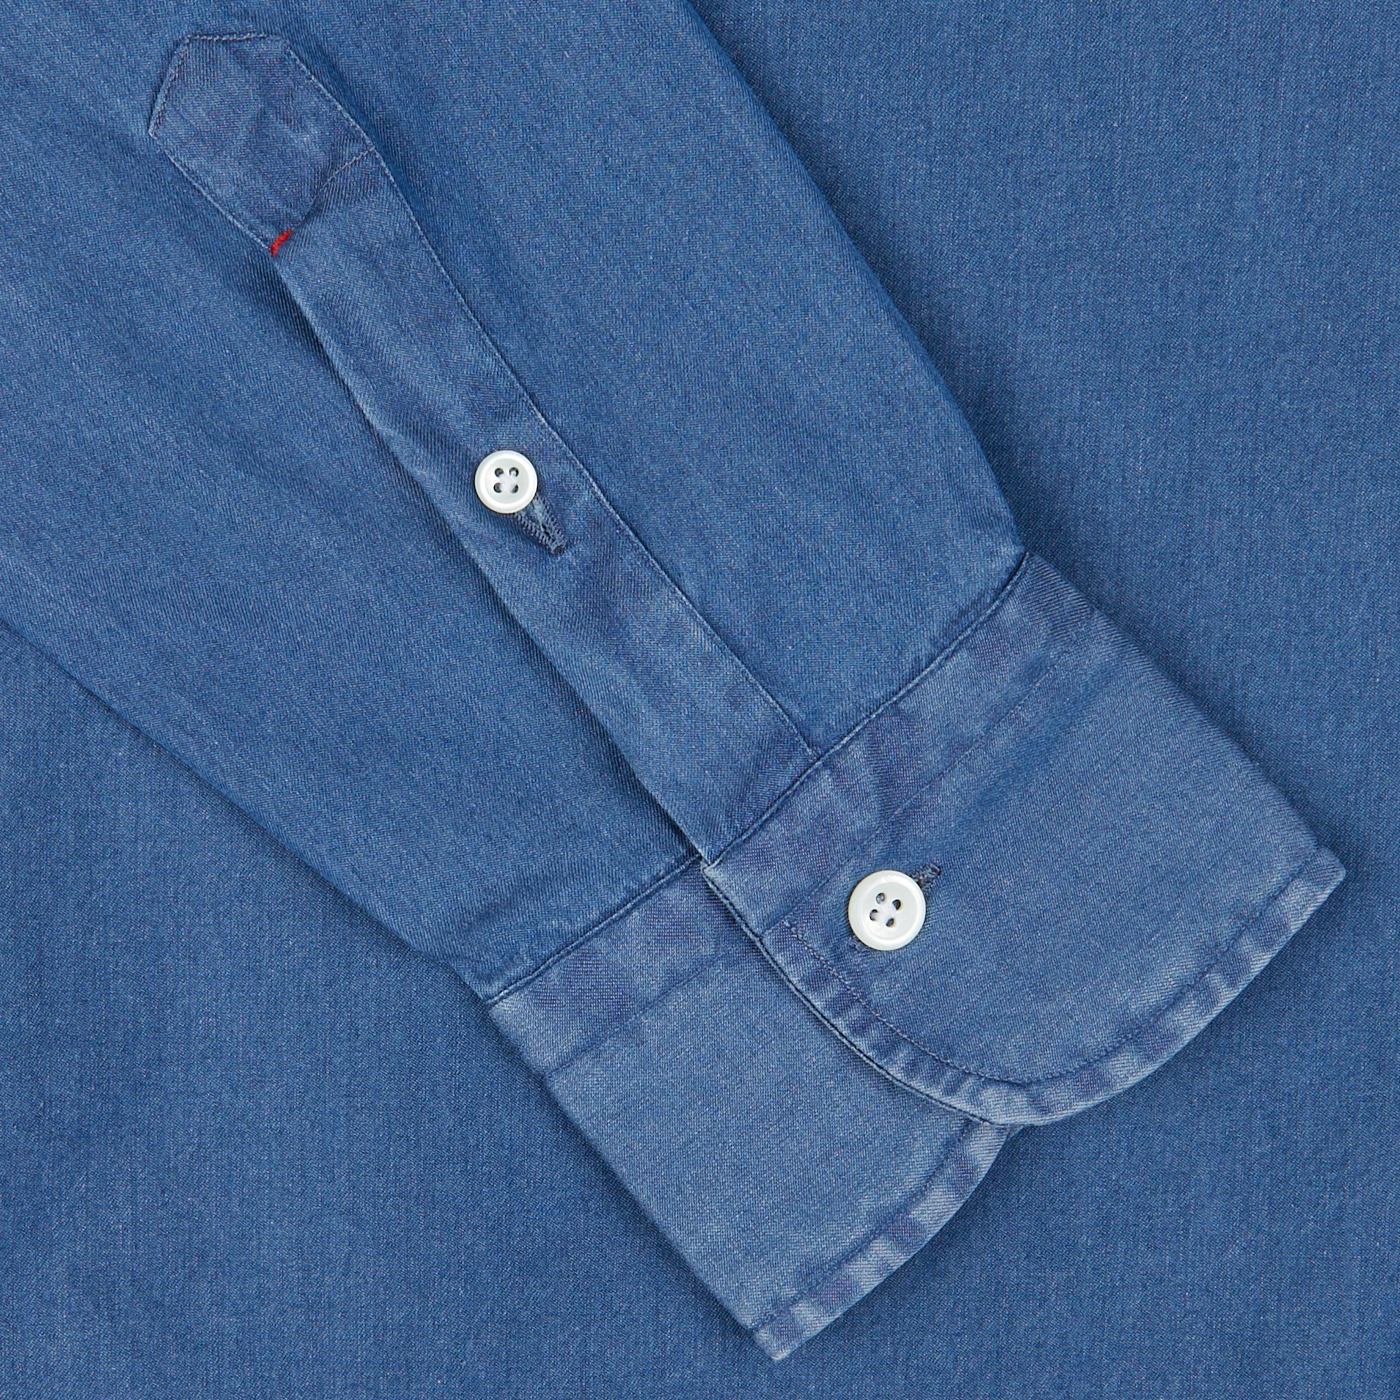 Dark blue Denim Washed Cotton BD Regular Fit Shirt cuff with button closure, crafted by Mazzarelli, an Italian shirtmaker.